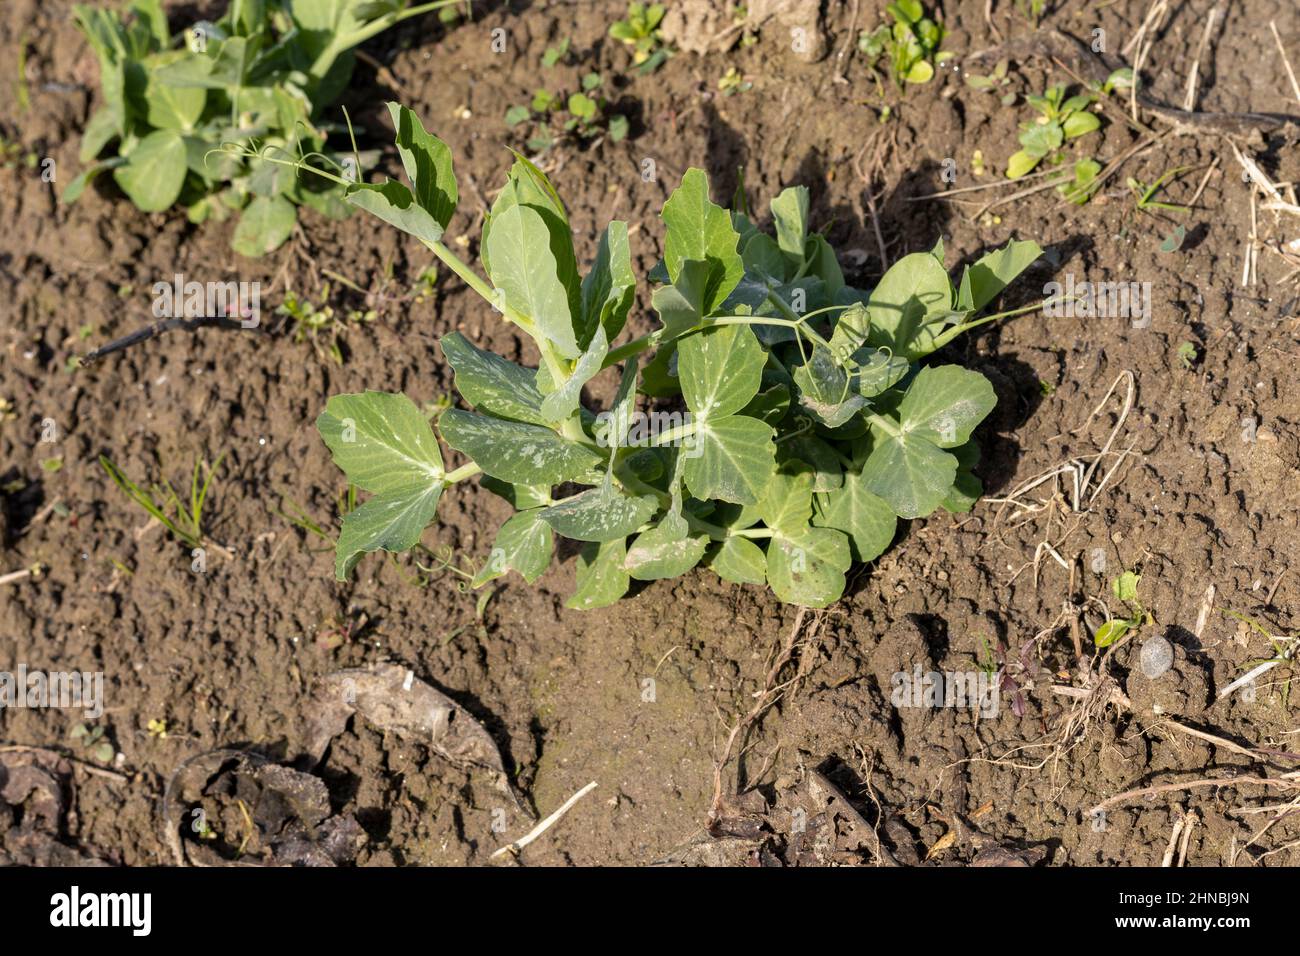 Closeup view of a small peas plant Stock Photo